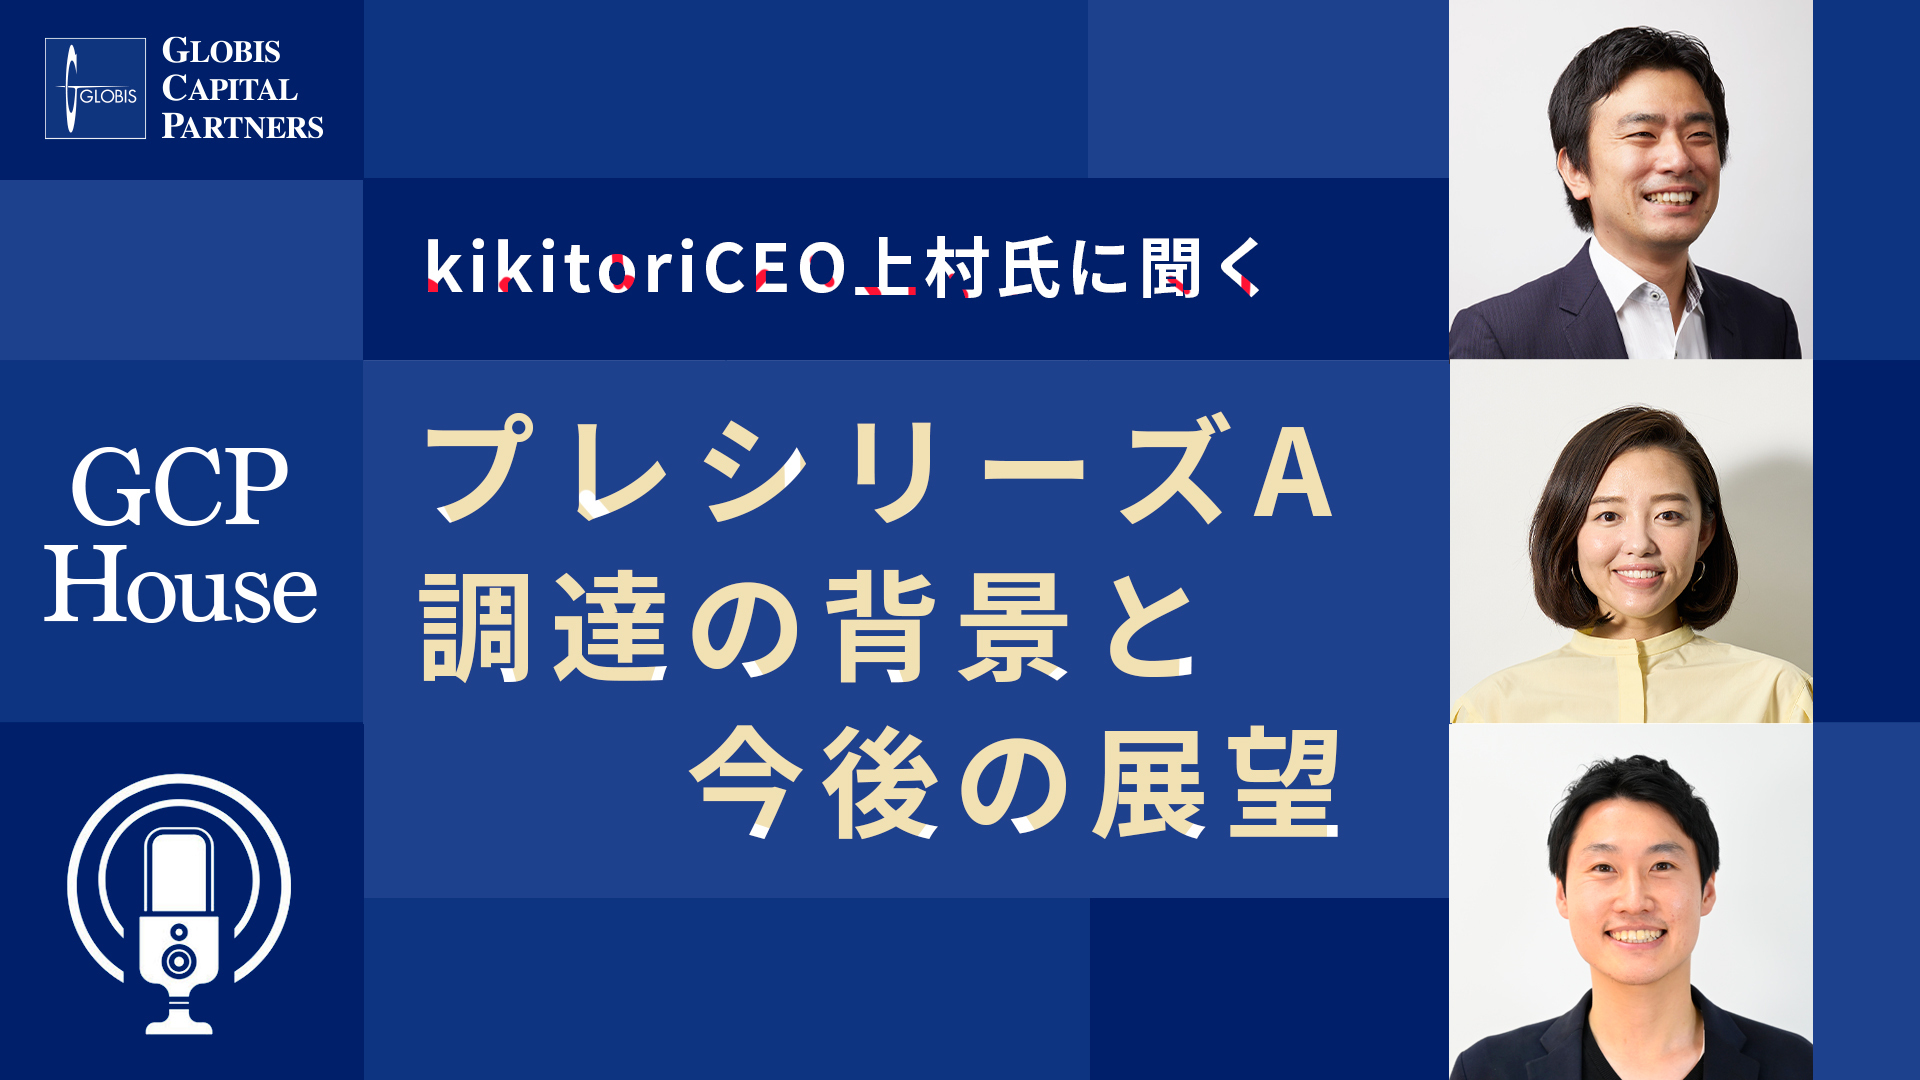 kikitoriCEO上村氏に聞く「プレシリーズA調達の背景と今後の展望」